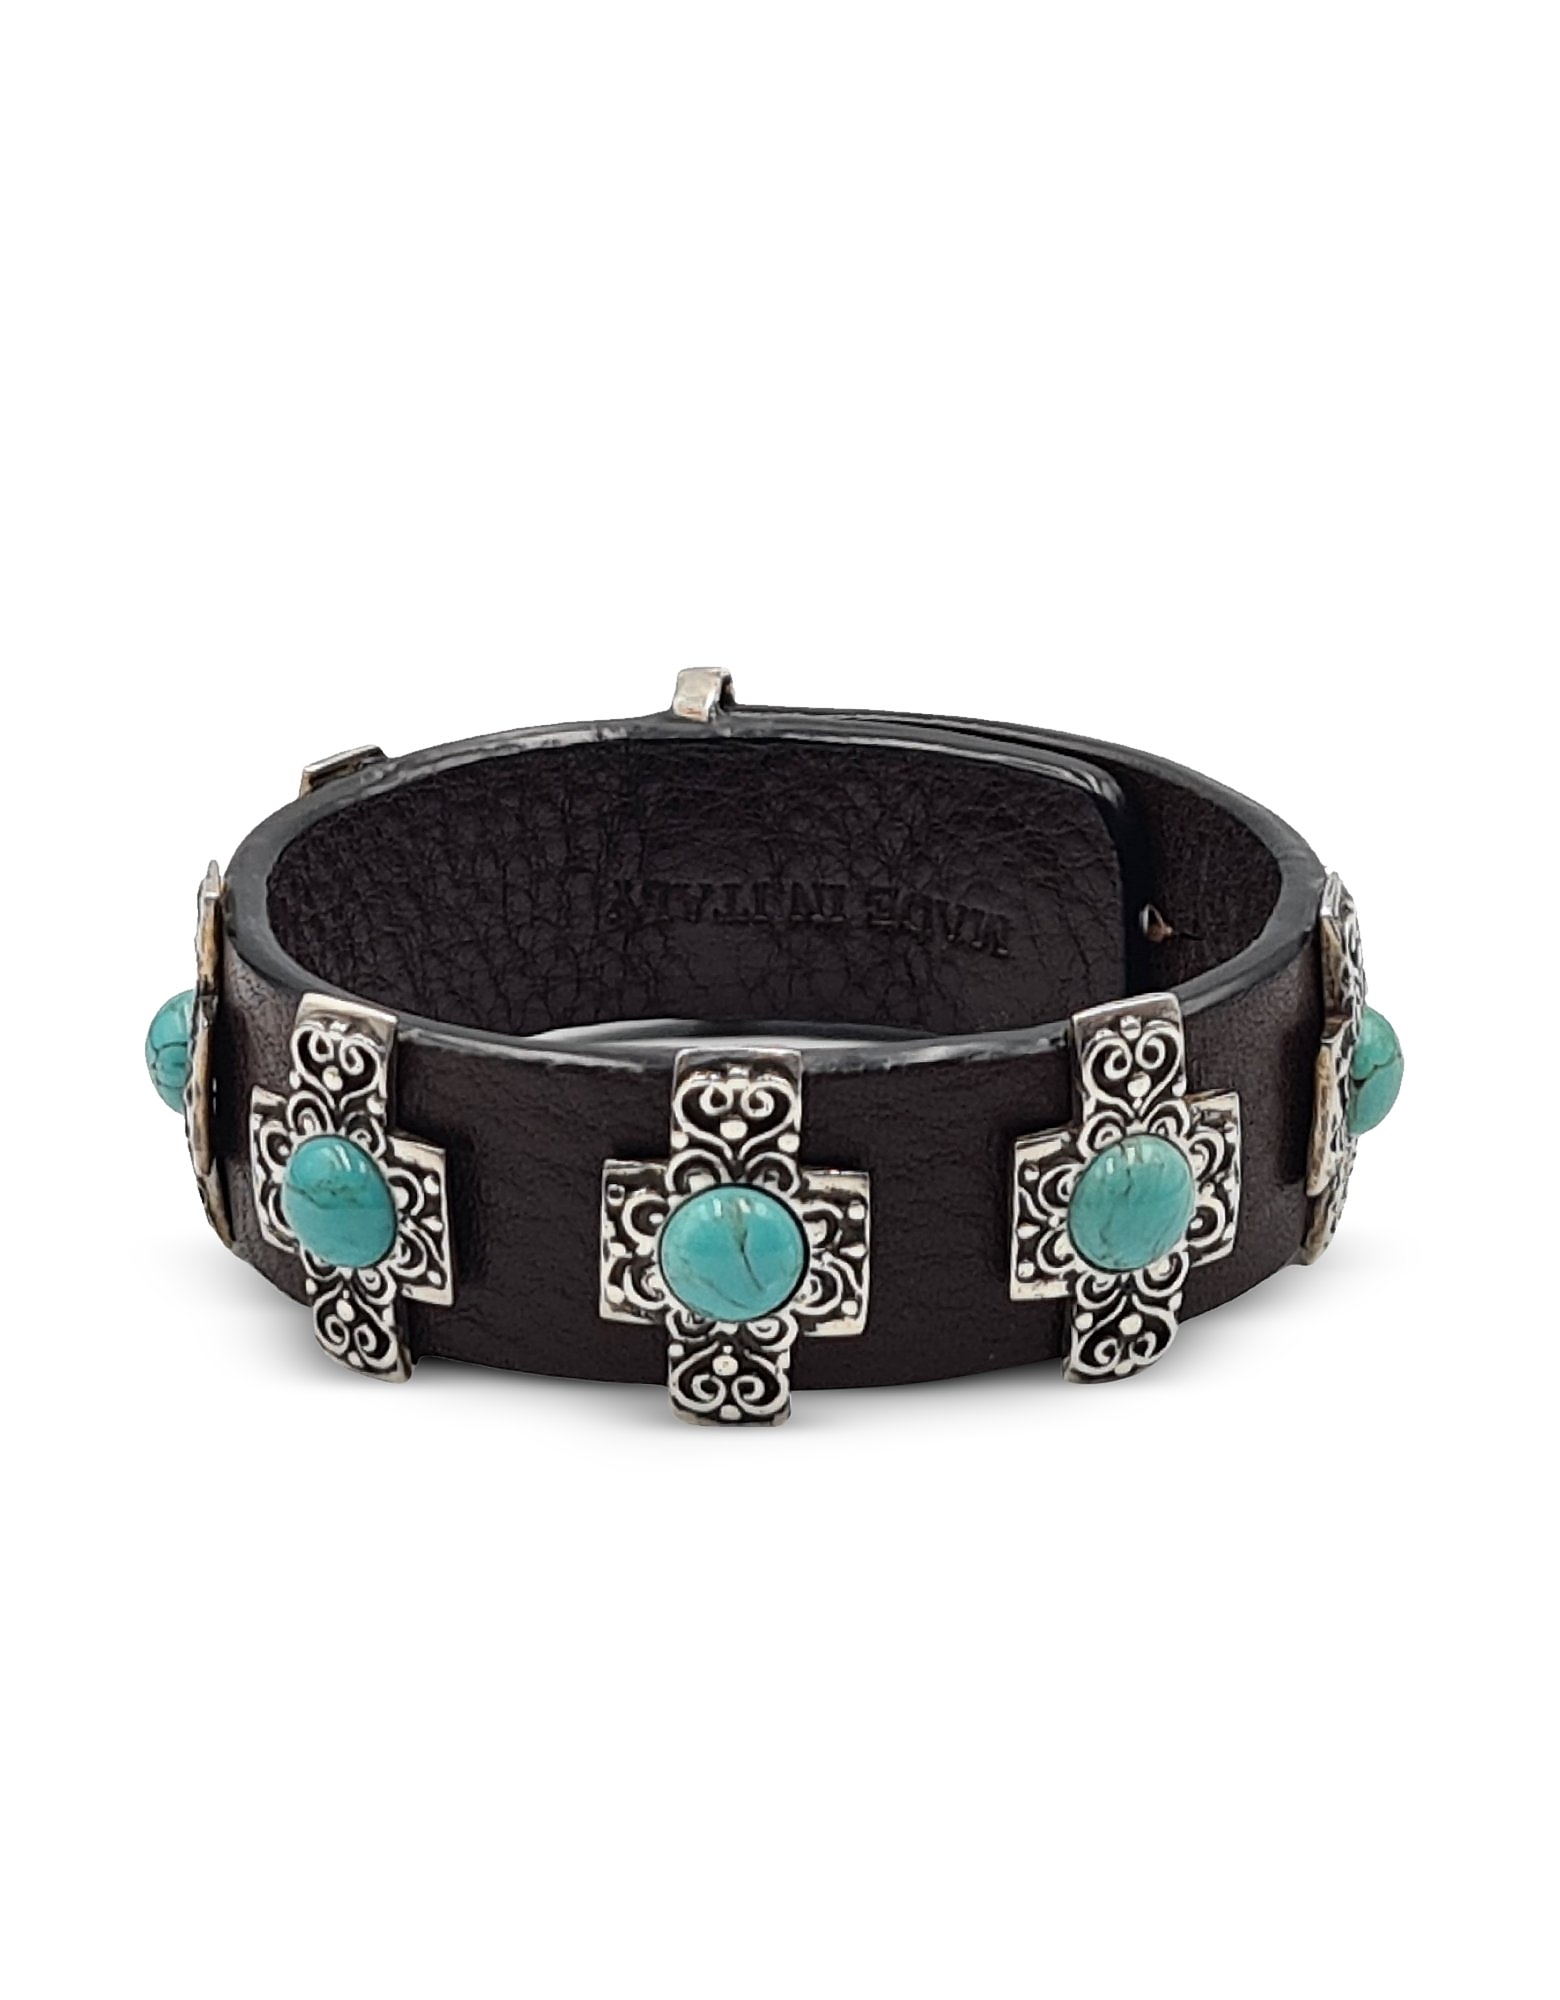 Bulganeri Designer Bracelets Turquoise Stone, Sterling Silver And Brown Leather Bracelet In Marron